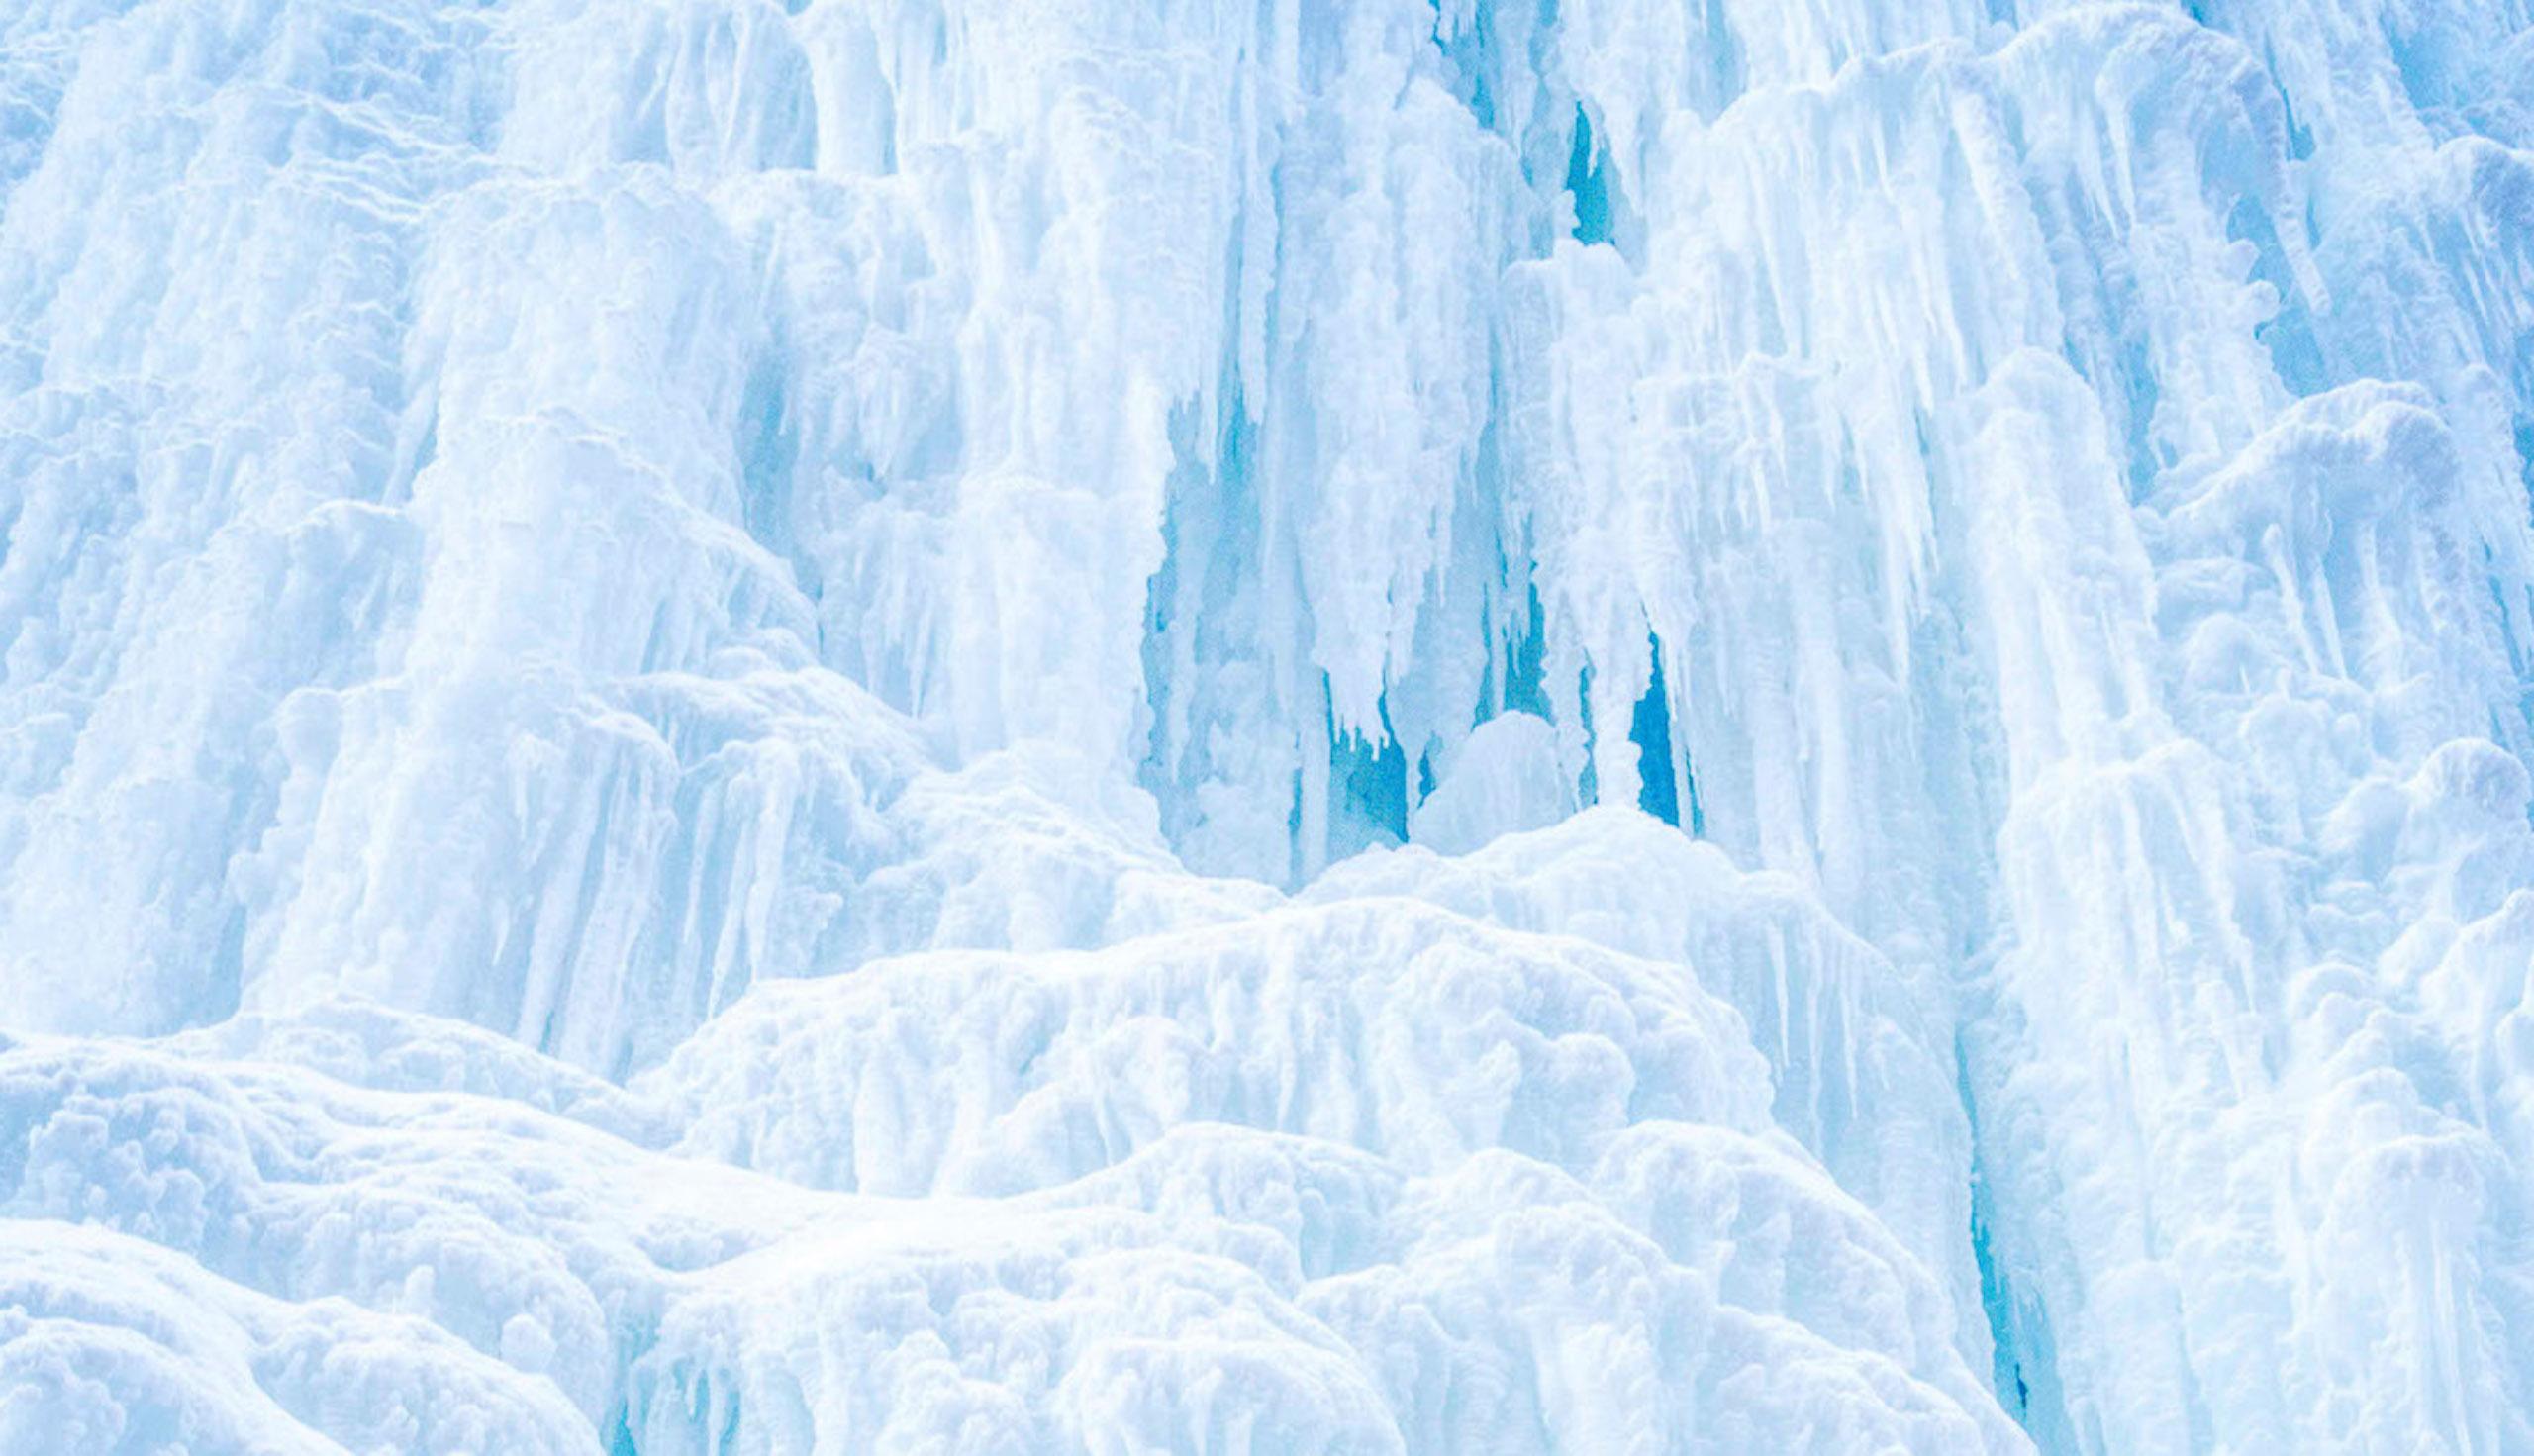 Frozen Waterfall by Luca Marziale - Landscape photography, winter, snowy, white For Sale 2